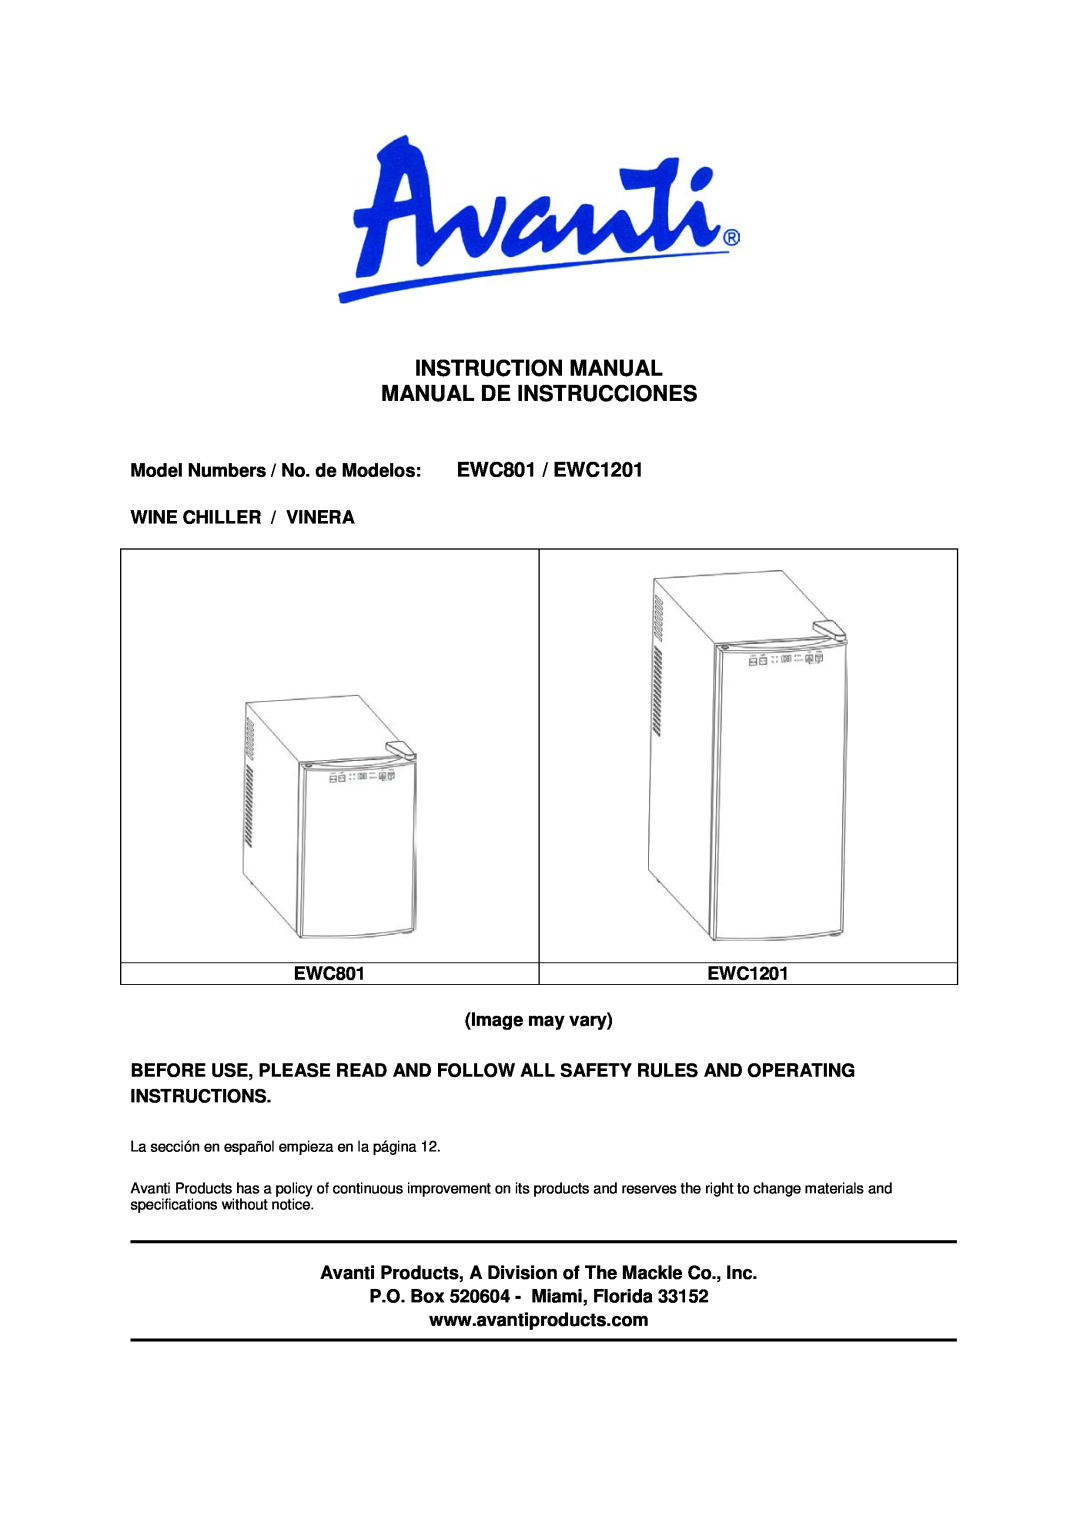 Avanti instruction manual Model Numbers / No. de Modelos EWC801 / EWC1201, Wine Chiller / Vinera, Image may vary 